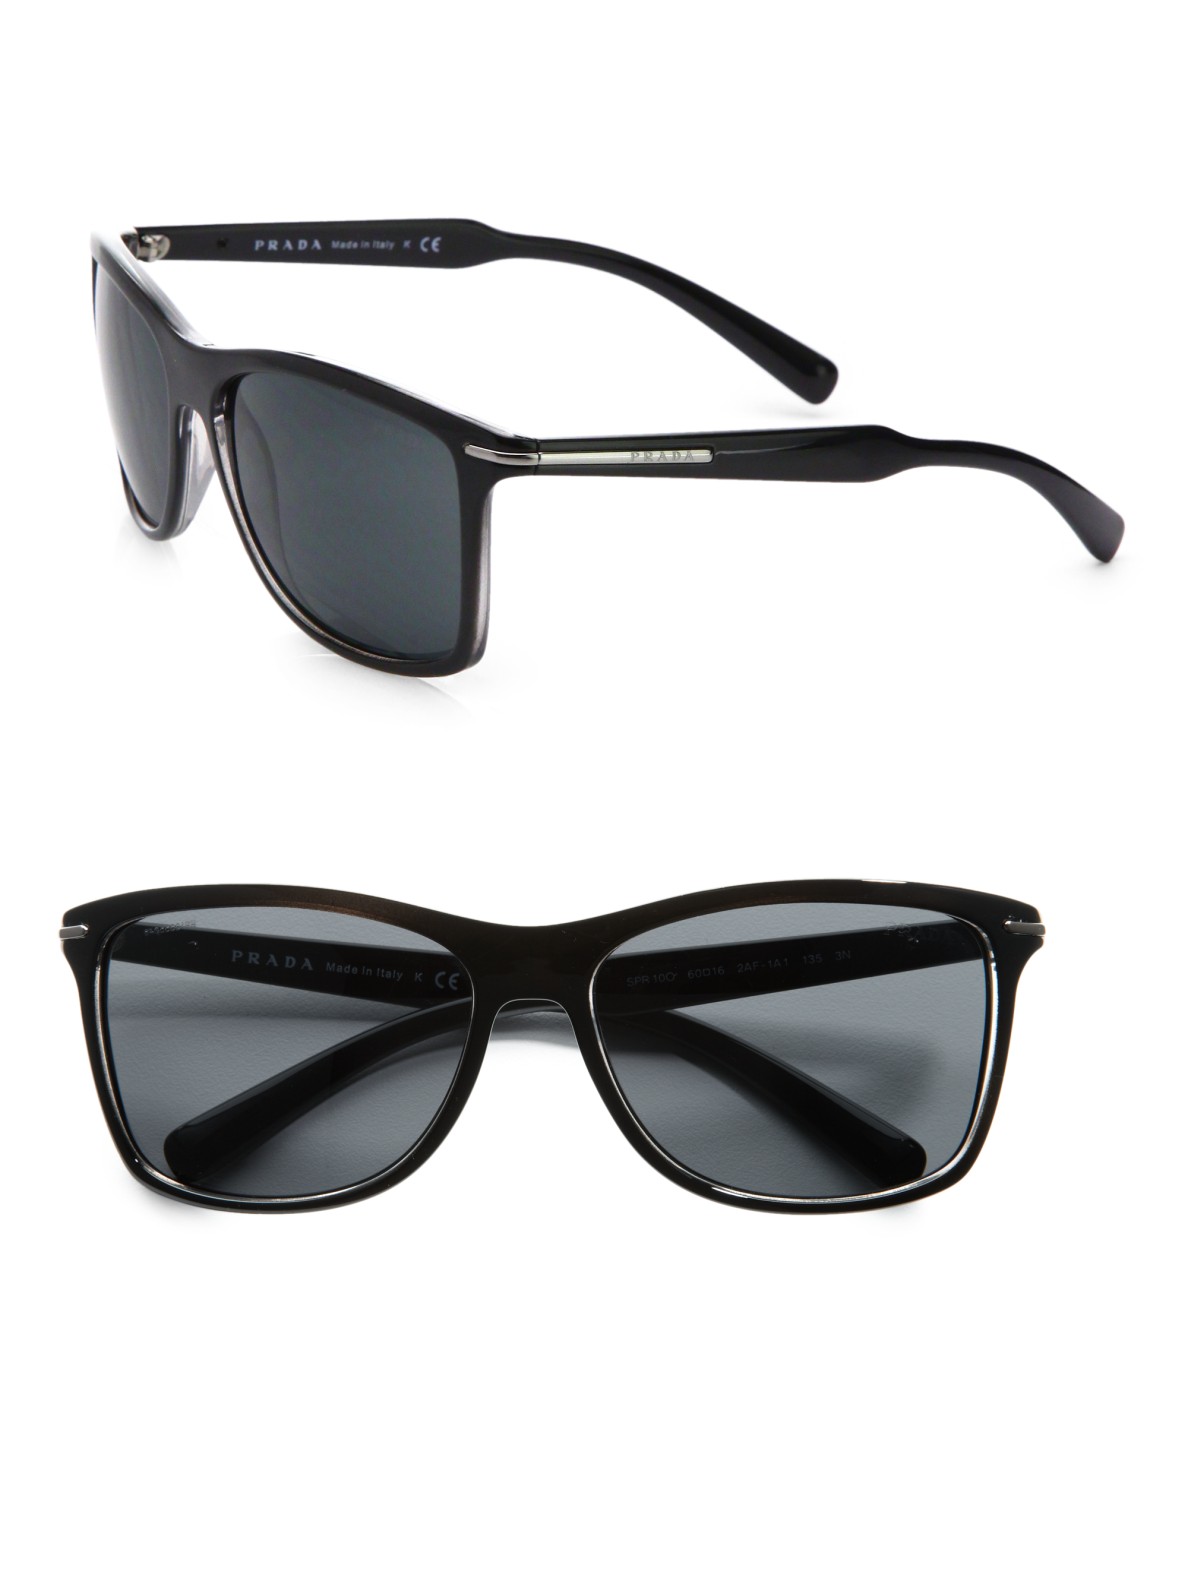 Prada Arrow Wayfarer Sunglasses in Black for Men - Lyst